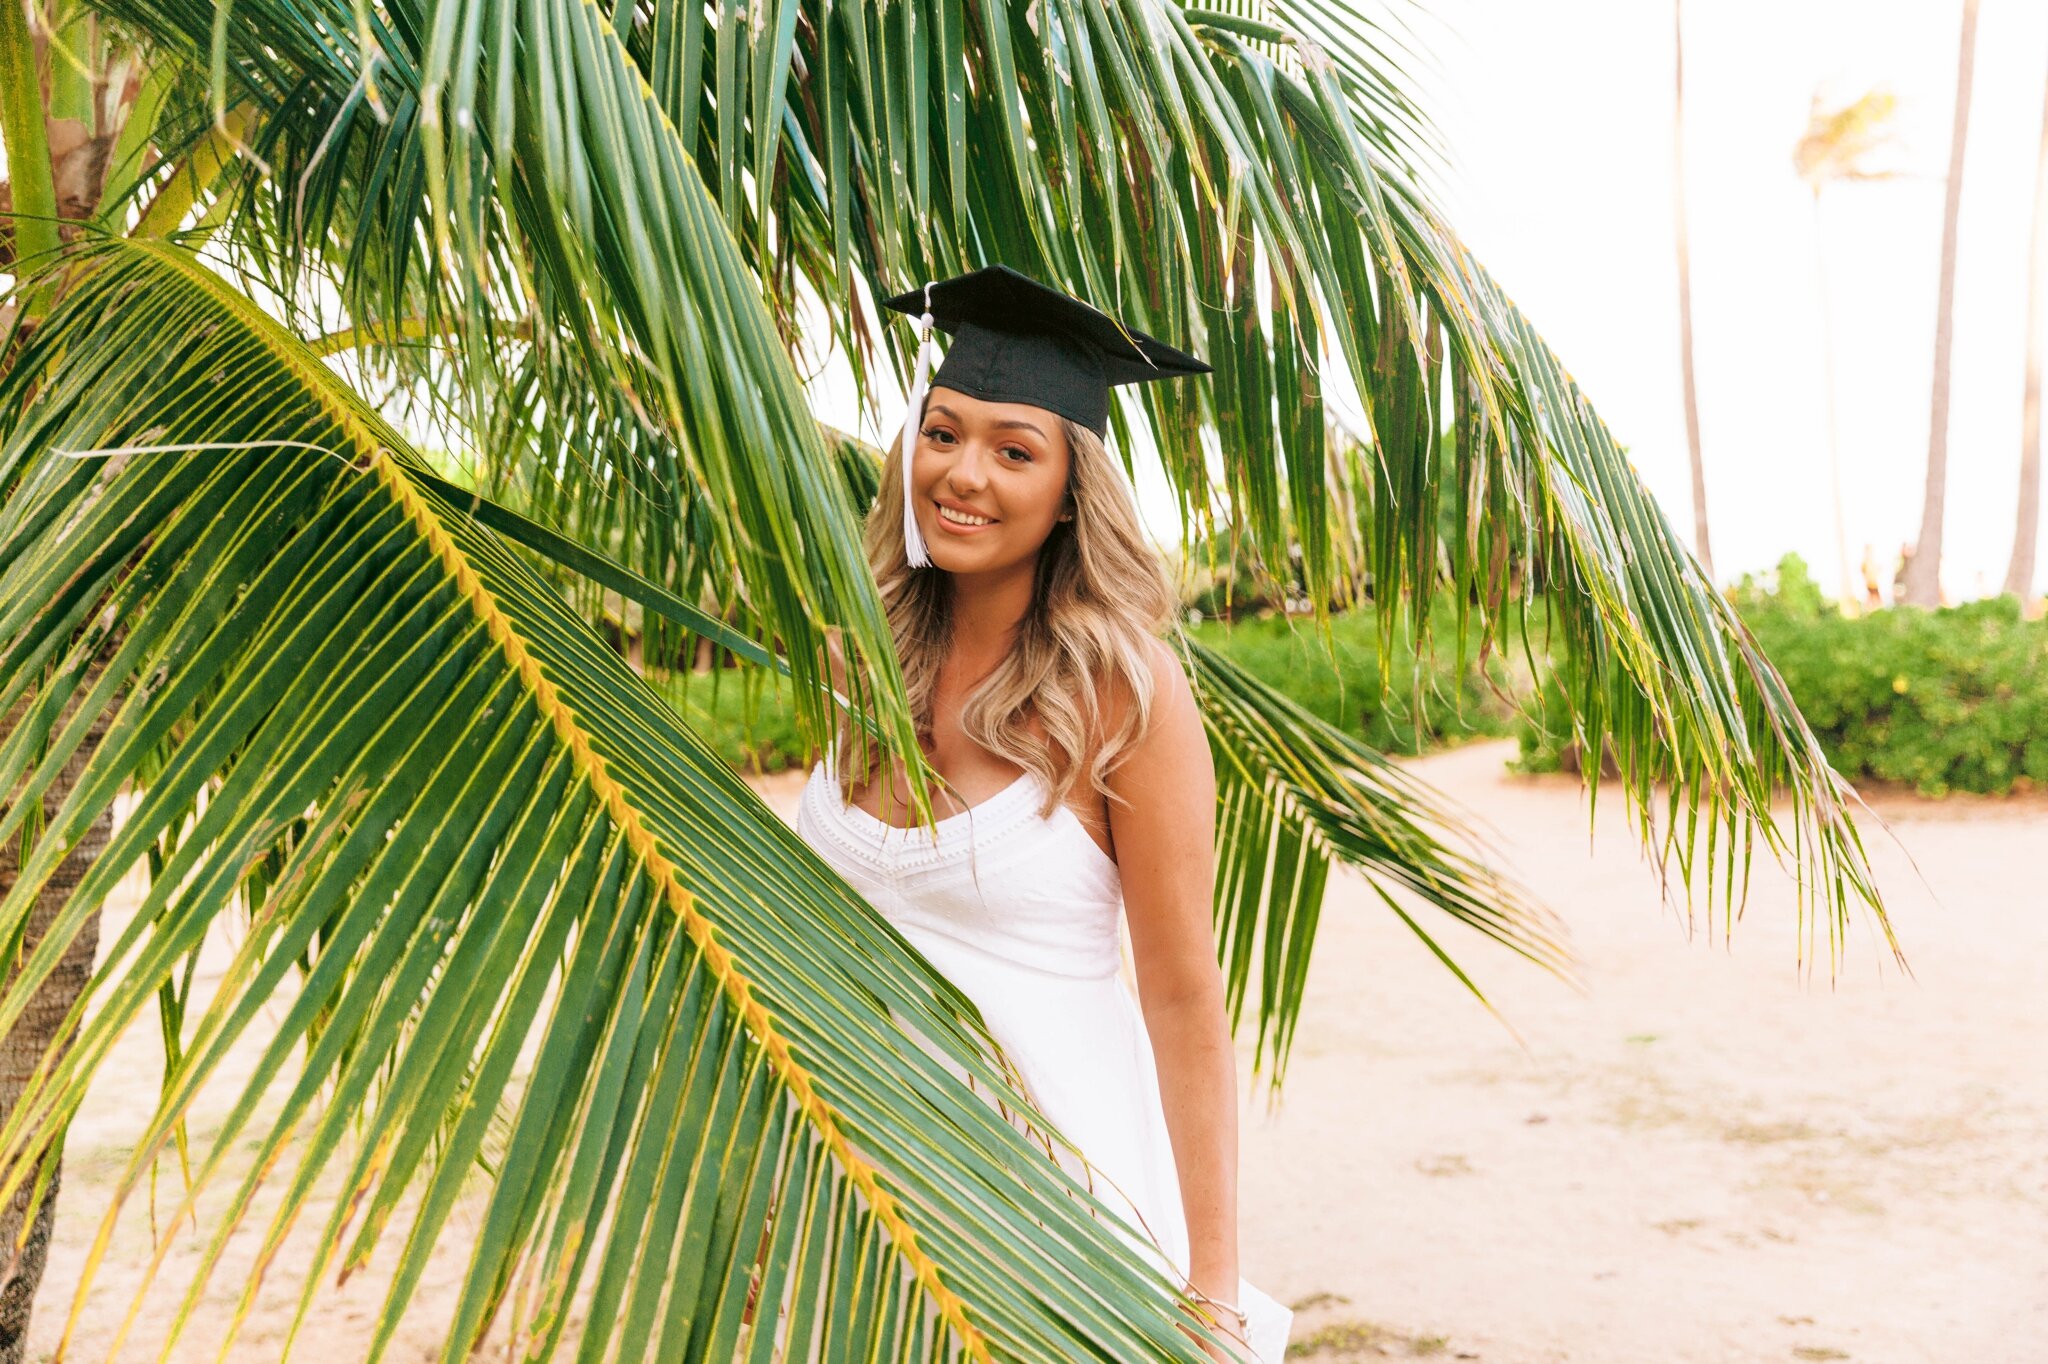 College Senior Photography Session - University Graduation Photographer - Waialae Beach, Oahu, Hawaii